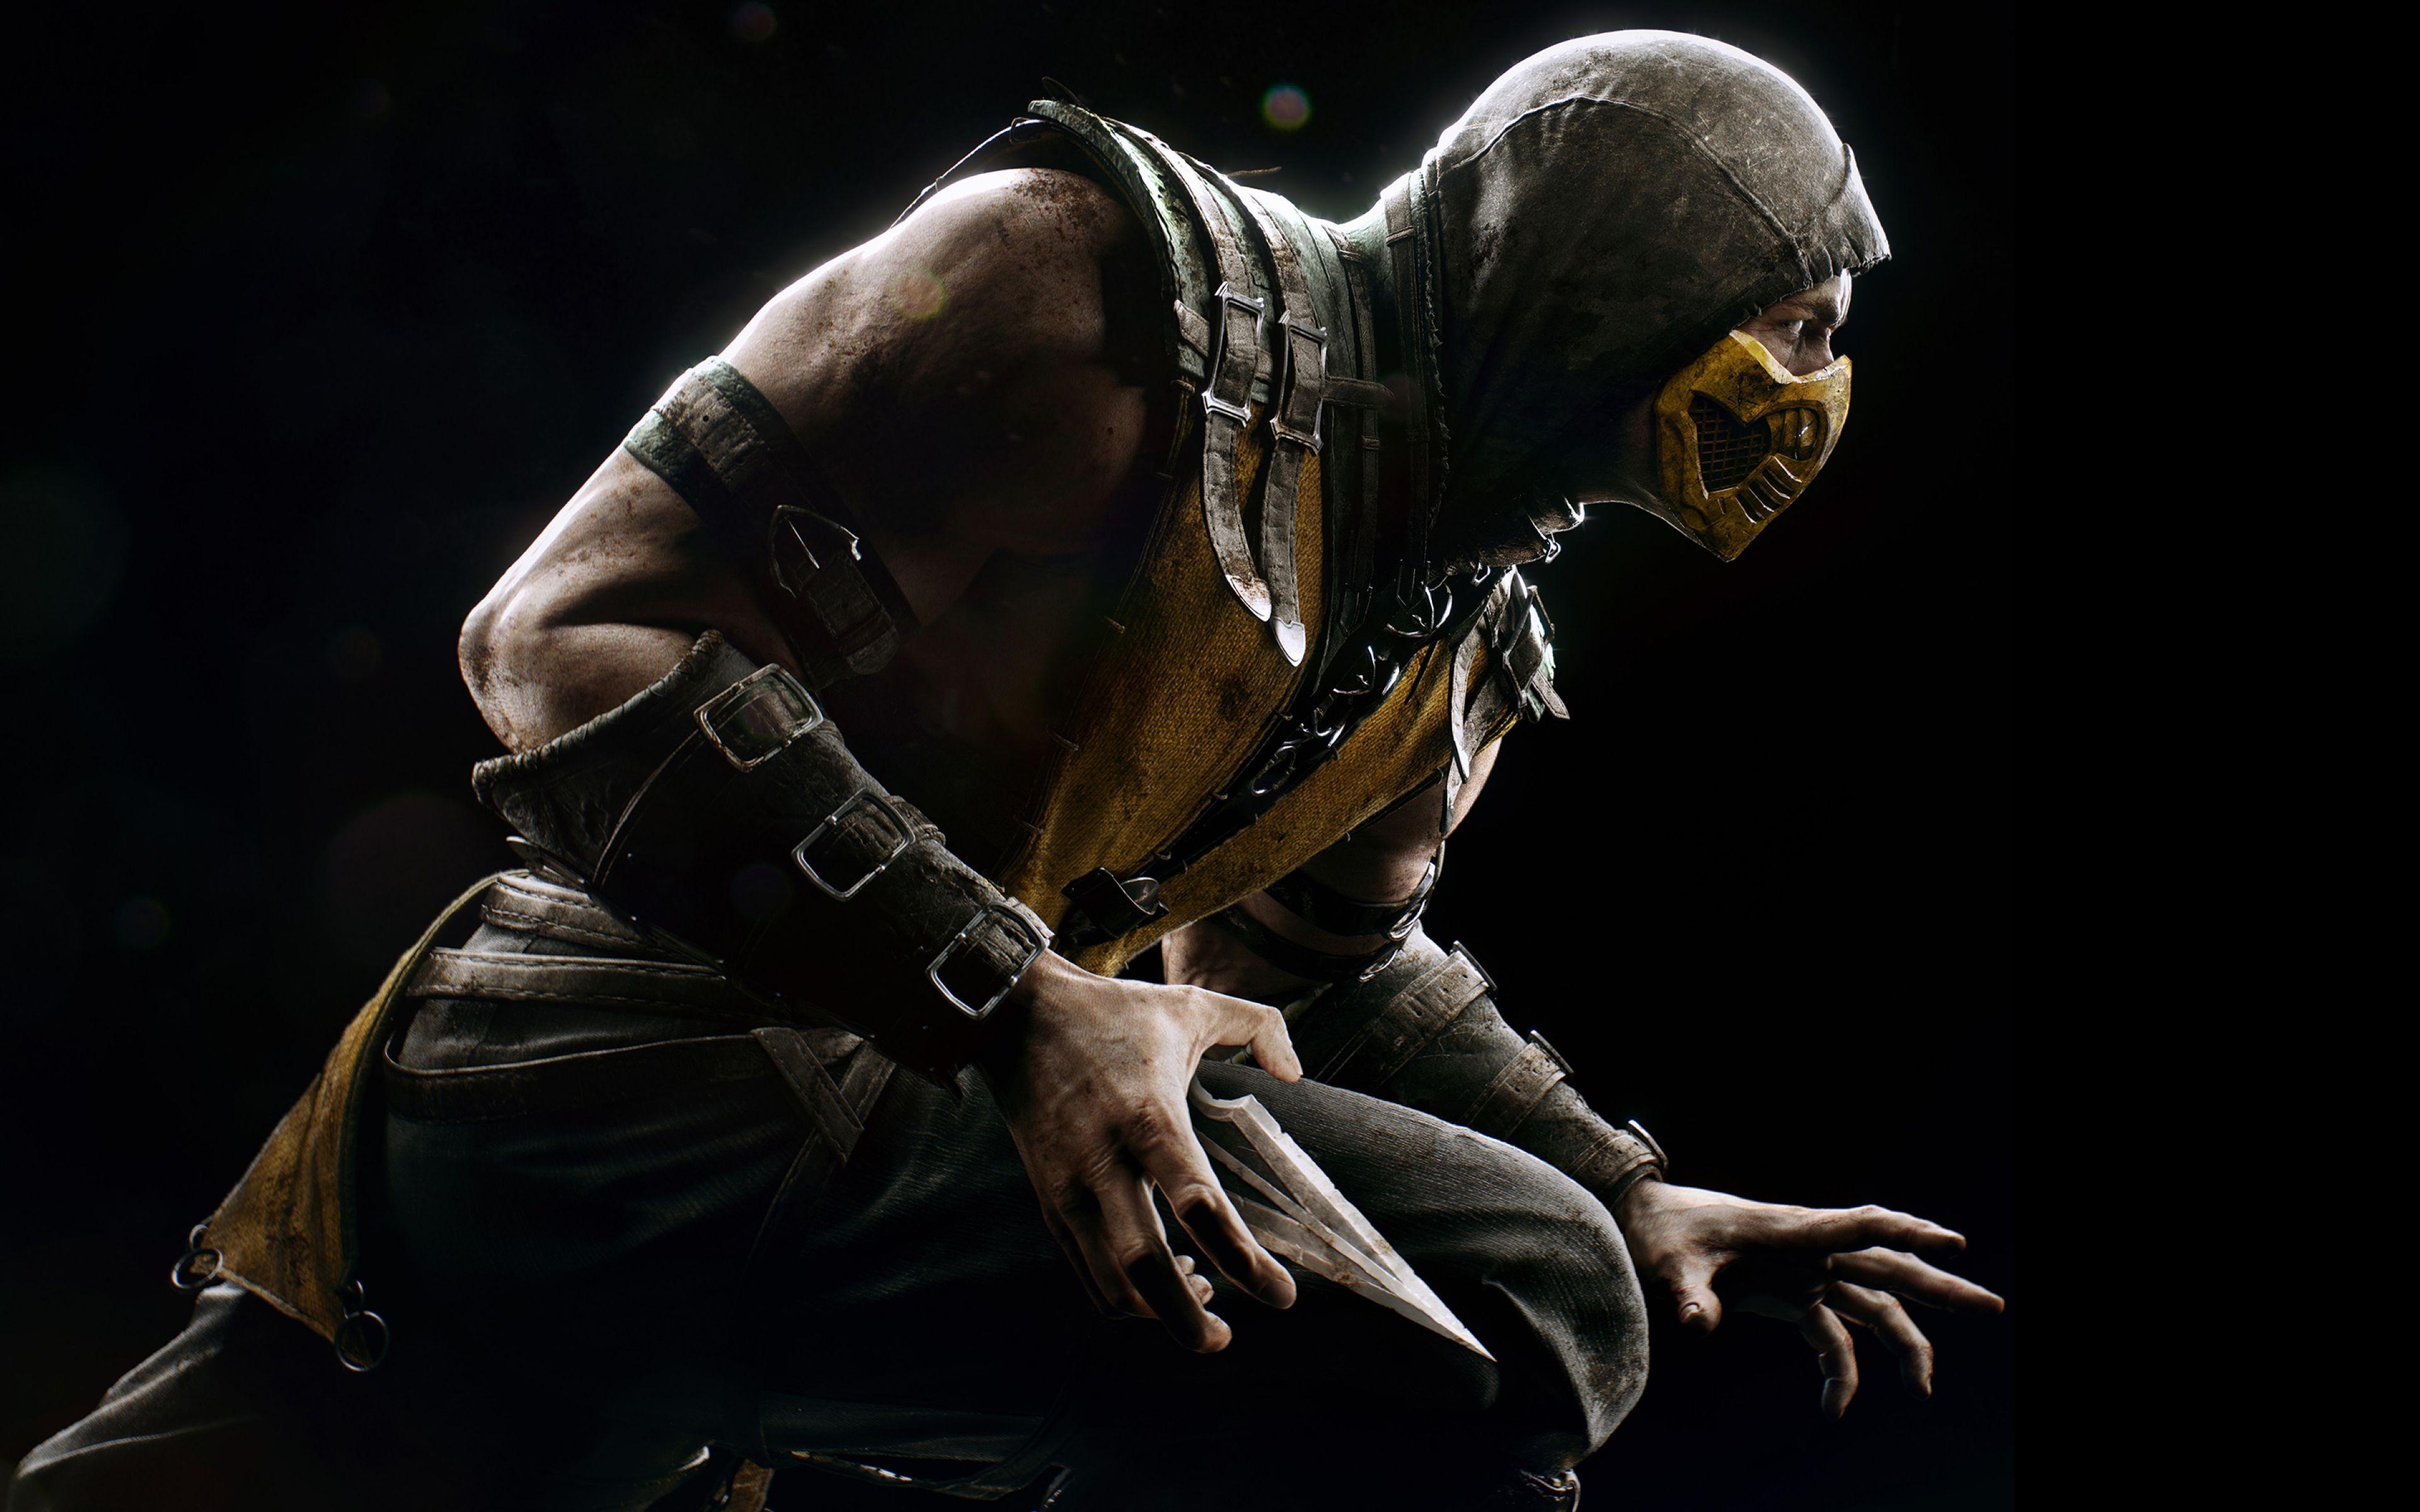 Mortal Kombat X Wallpaper, HDQ Cover Mortal Kombat X Background